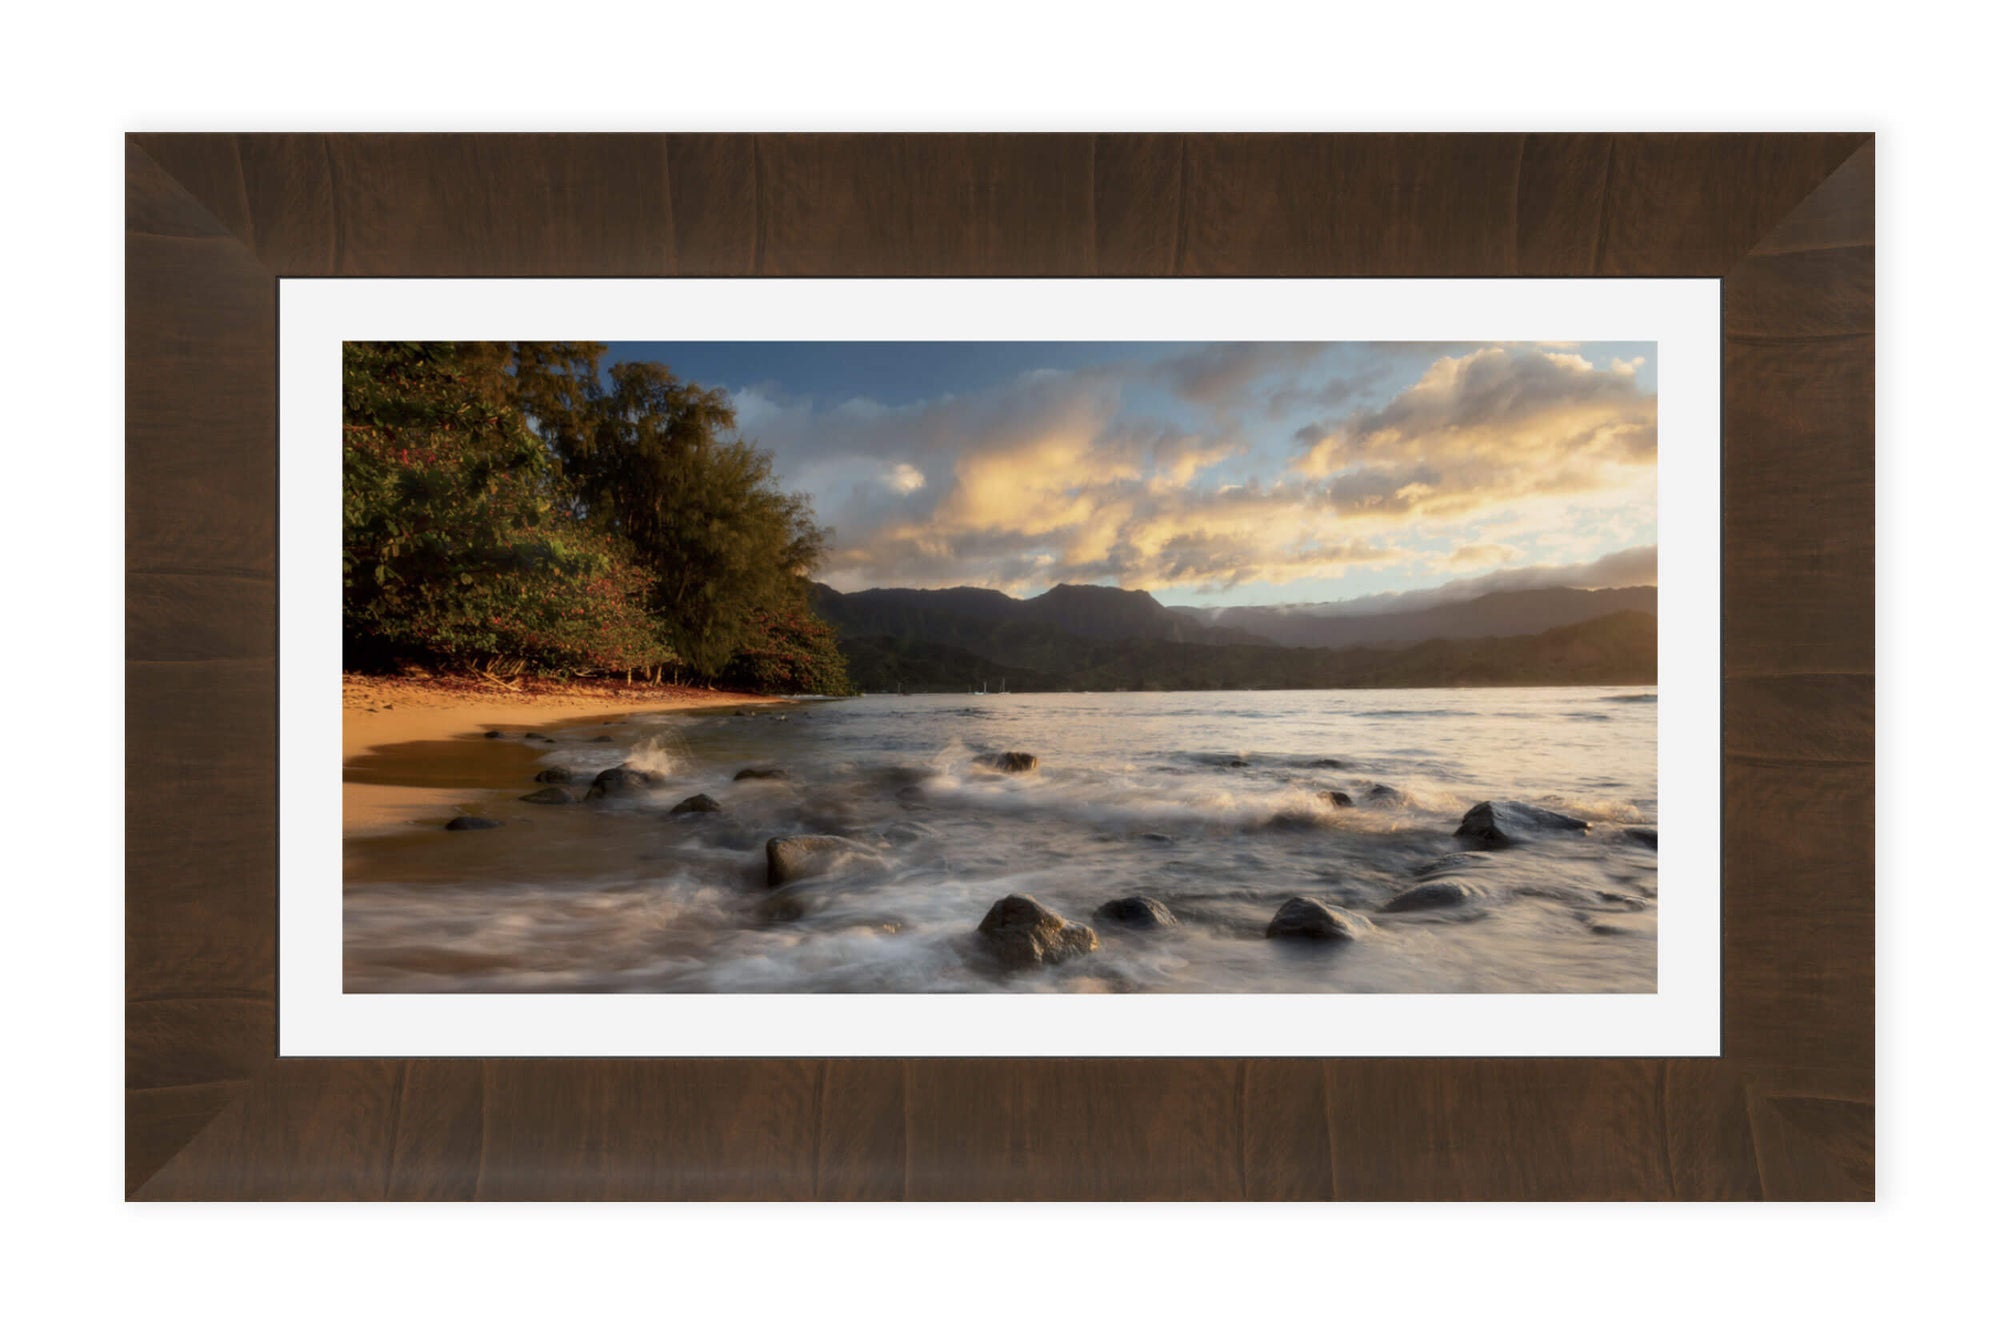 A framed photograph of Puu Poa Beach near Hanalei Bay Resort on Kauai.